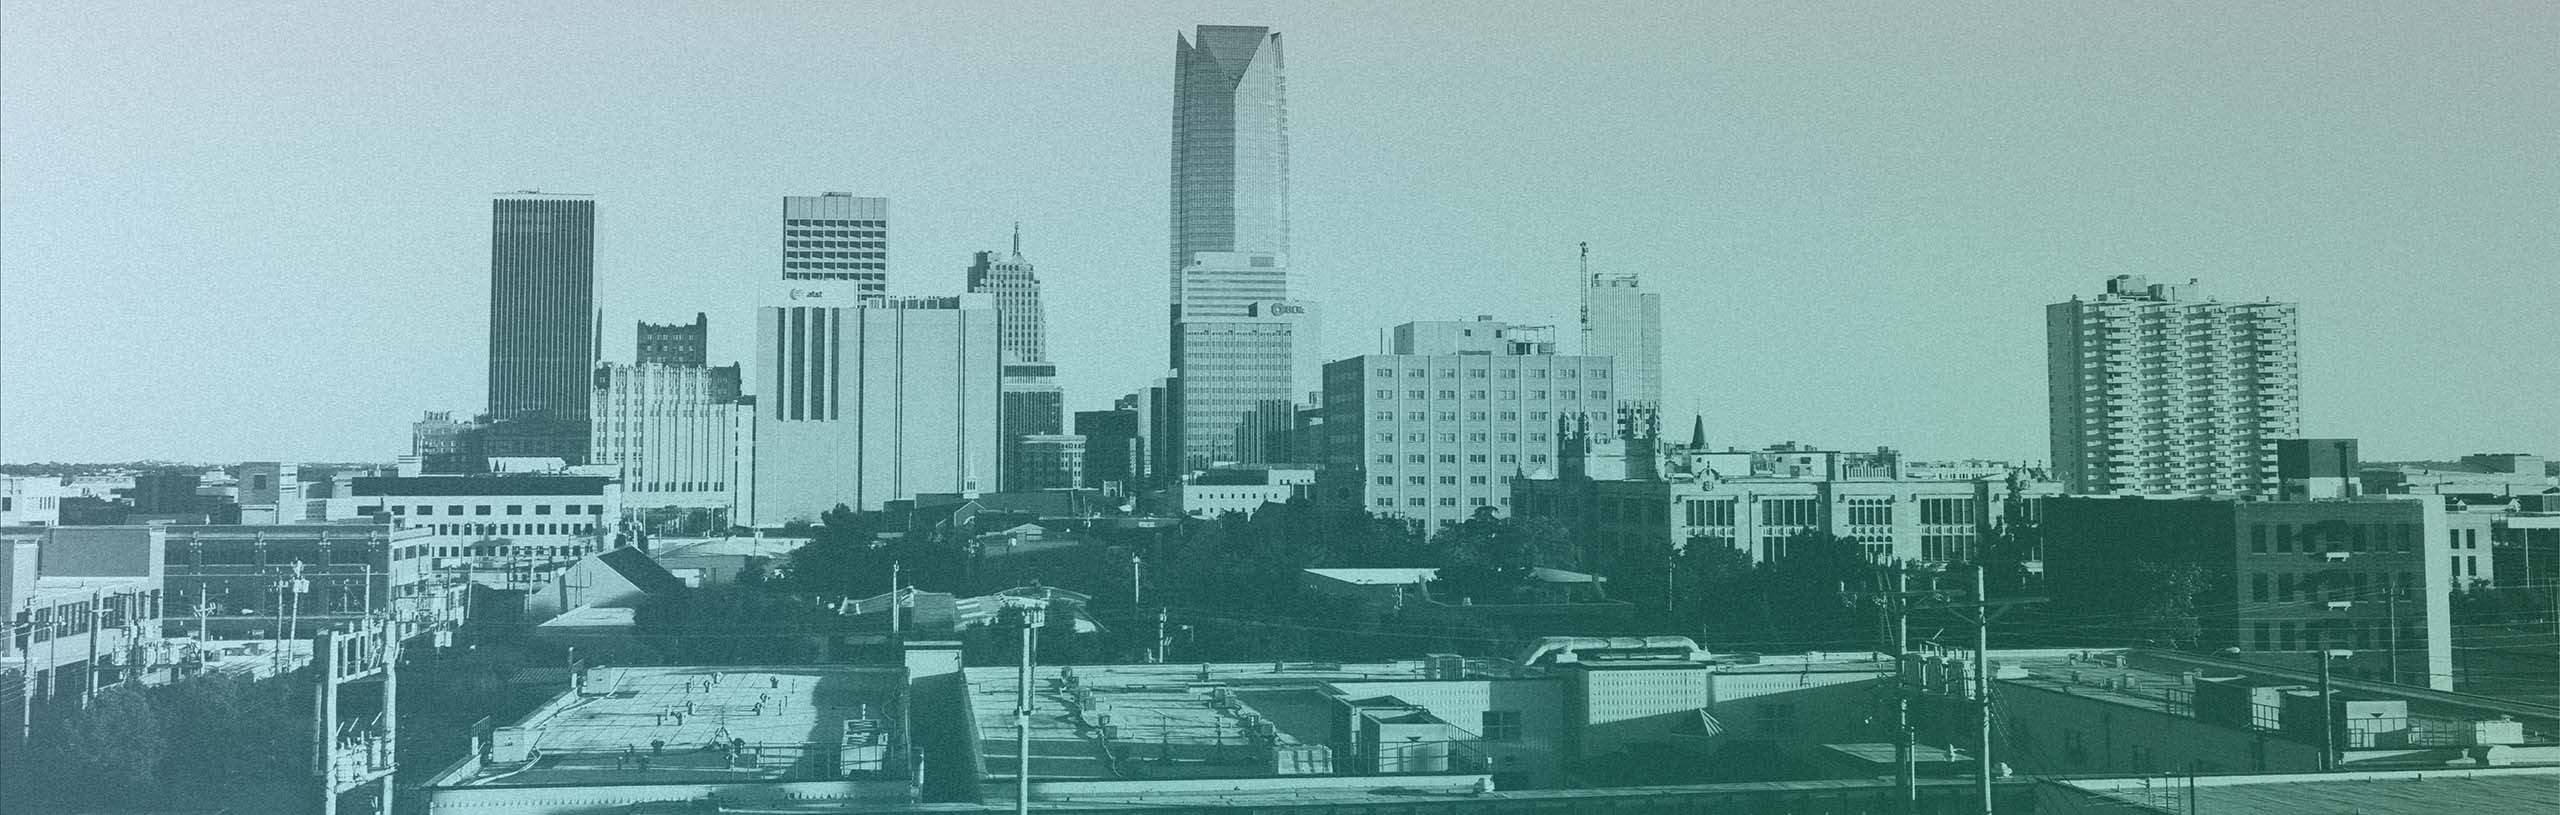 Plains Ventures Oklahoma City Skyline